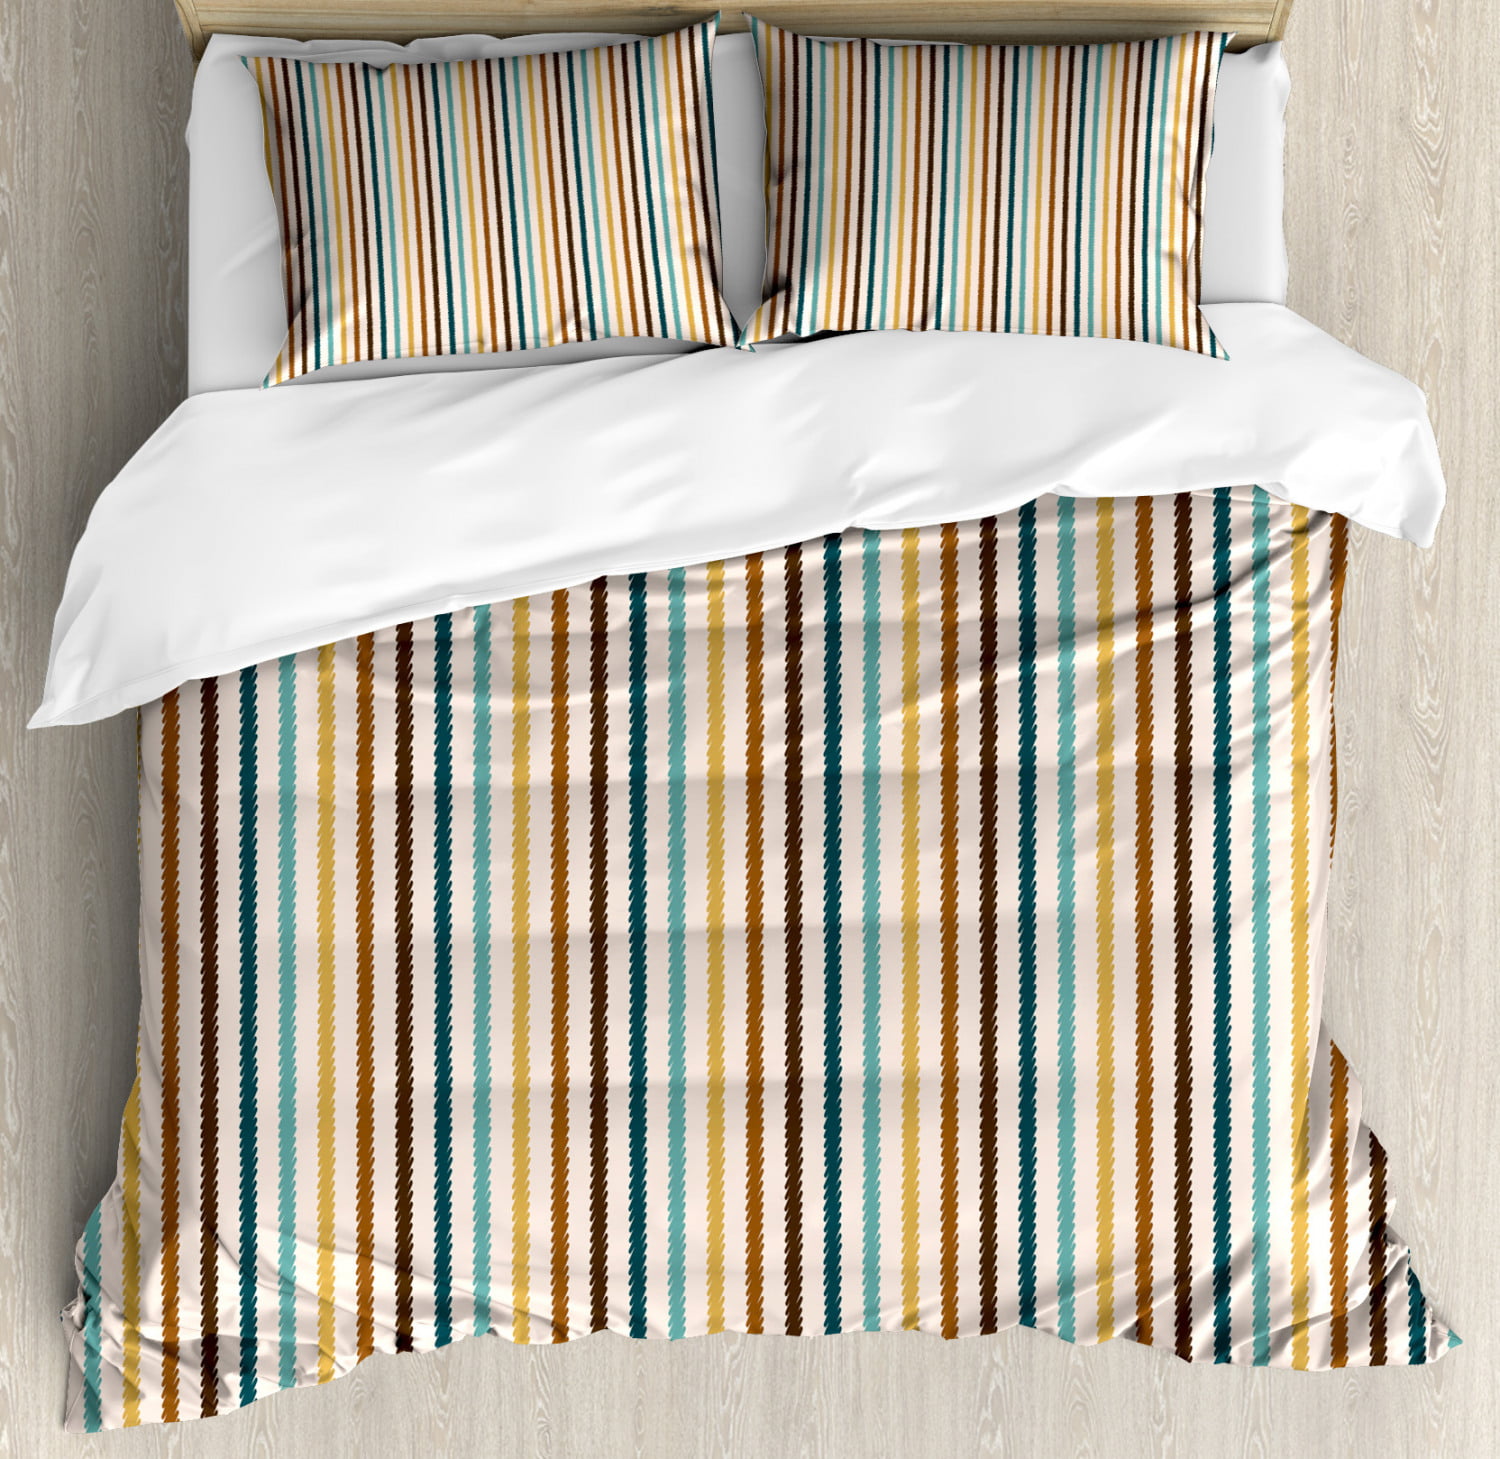 Details about   Tie Dye Pillow Sham Decorative Pillowcase 3 Sizes Bedroom Decor by Ambesonne 